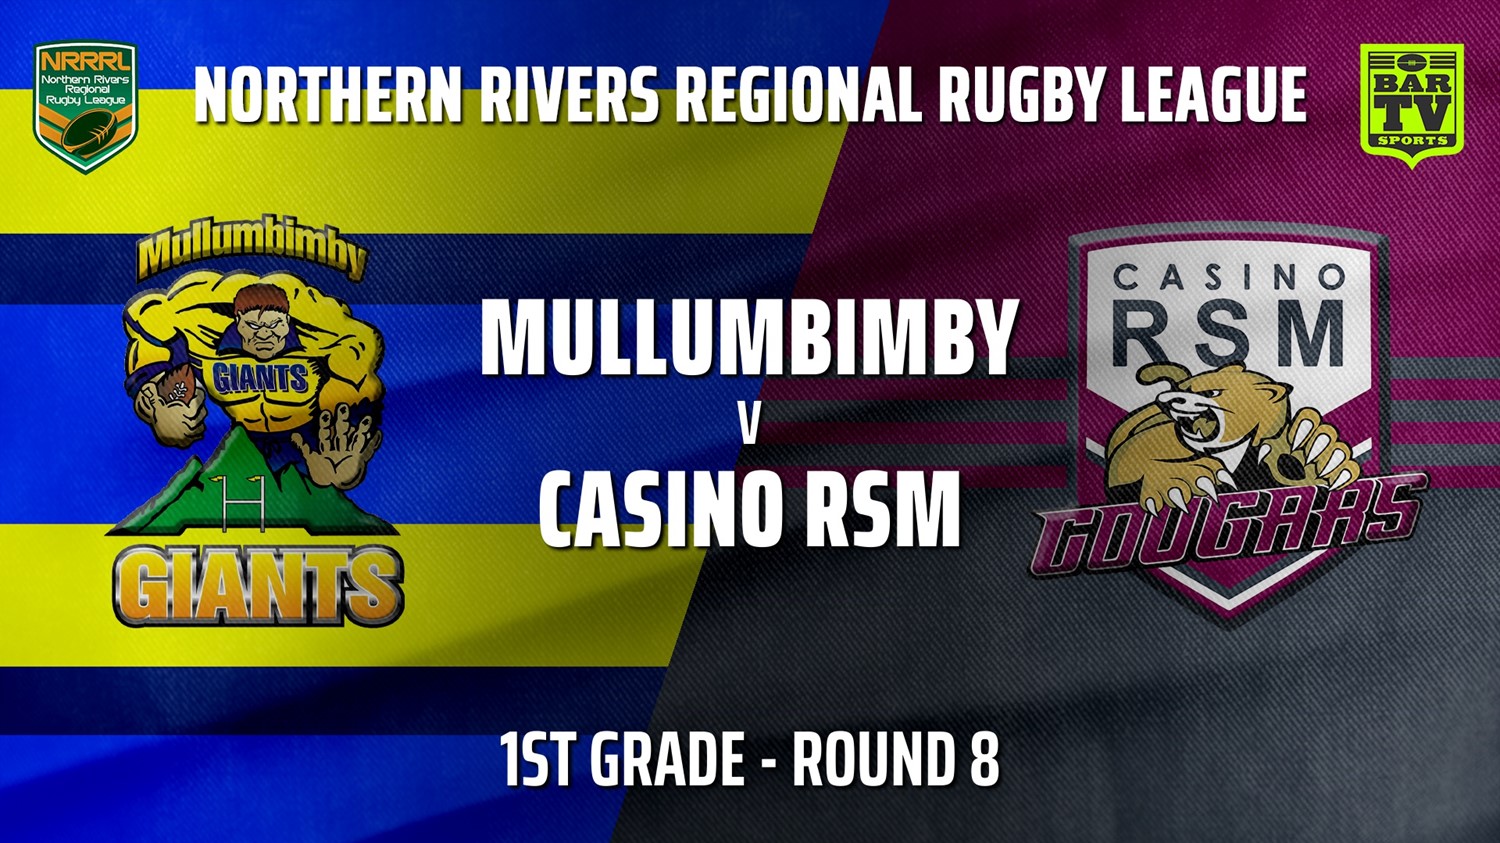 210627-Northern Rivers Round 8 - 1st Grade - Mullumbimby Giants v Casino RSM Cougars Slate Image